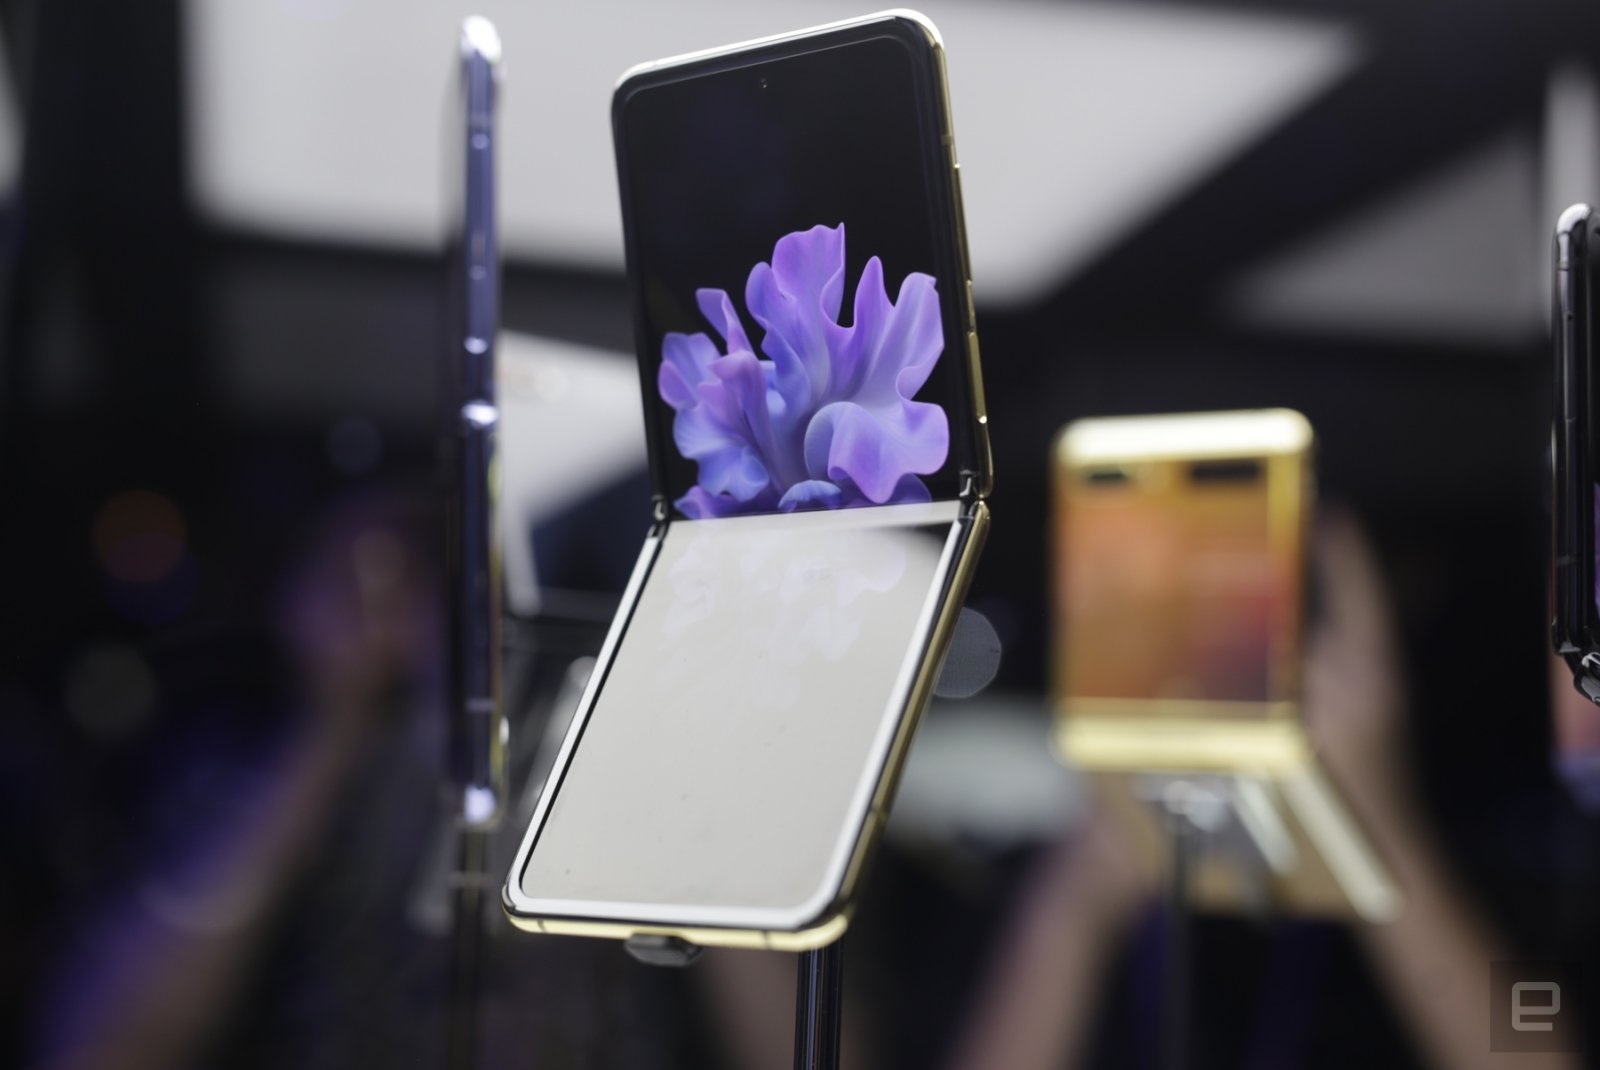 Galaxy Z Flip teardown video looks inside Samsung's latest foldable | DeviceDaily.com